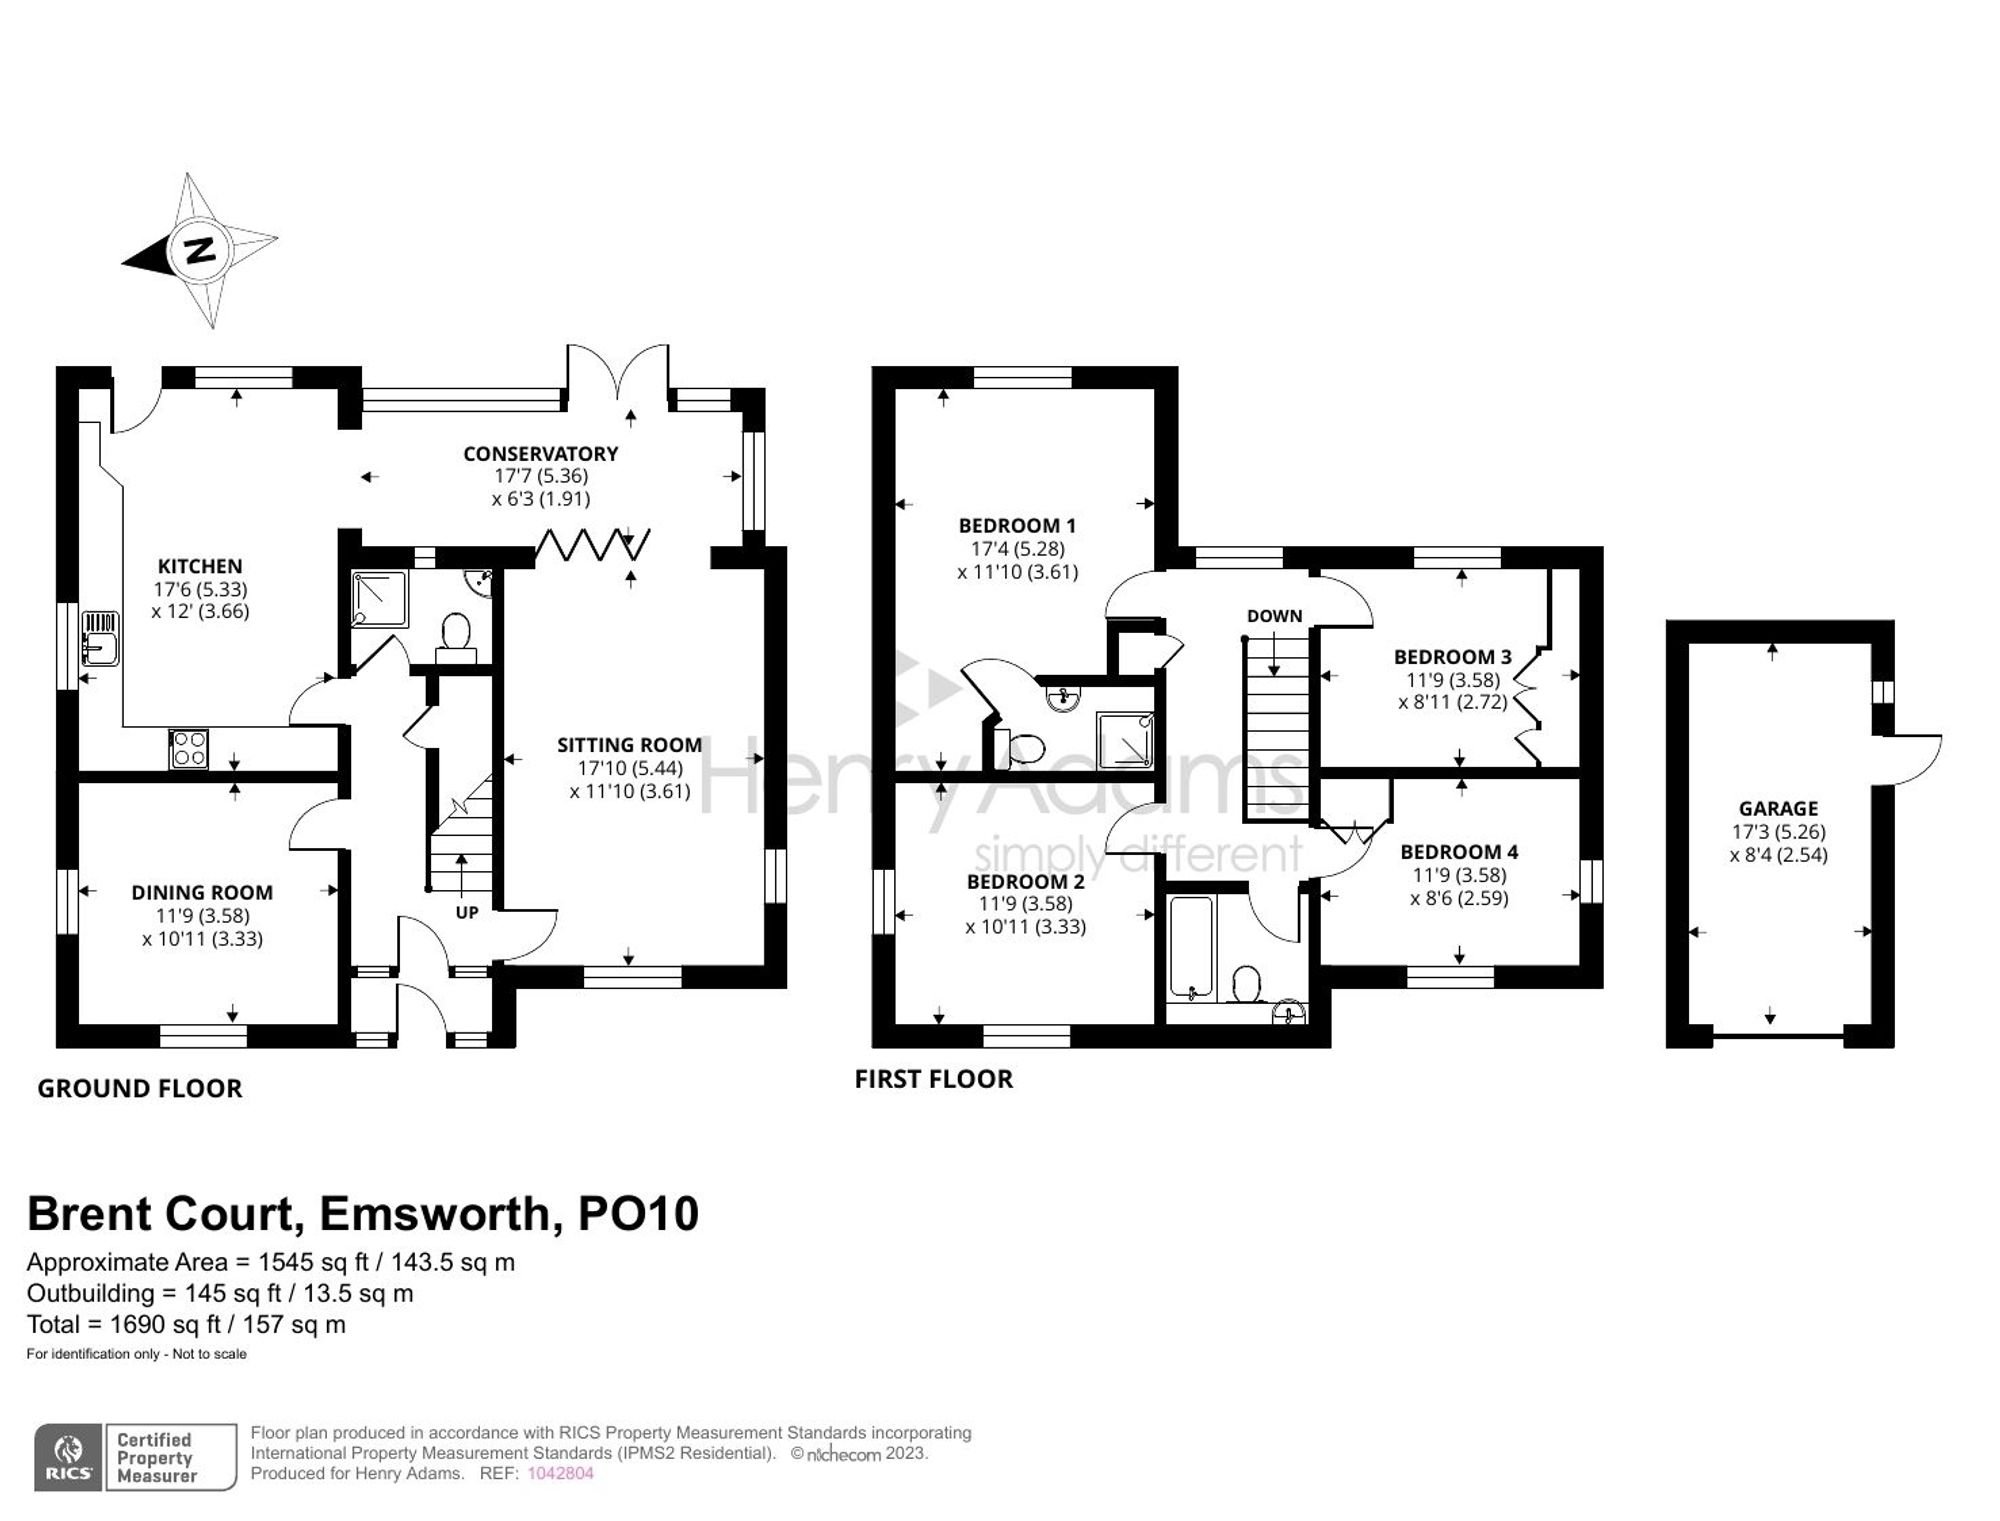 Brent Court, Emsworth, PO10 floorplans